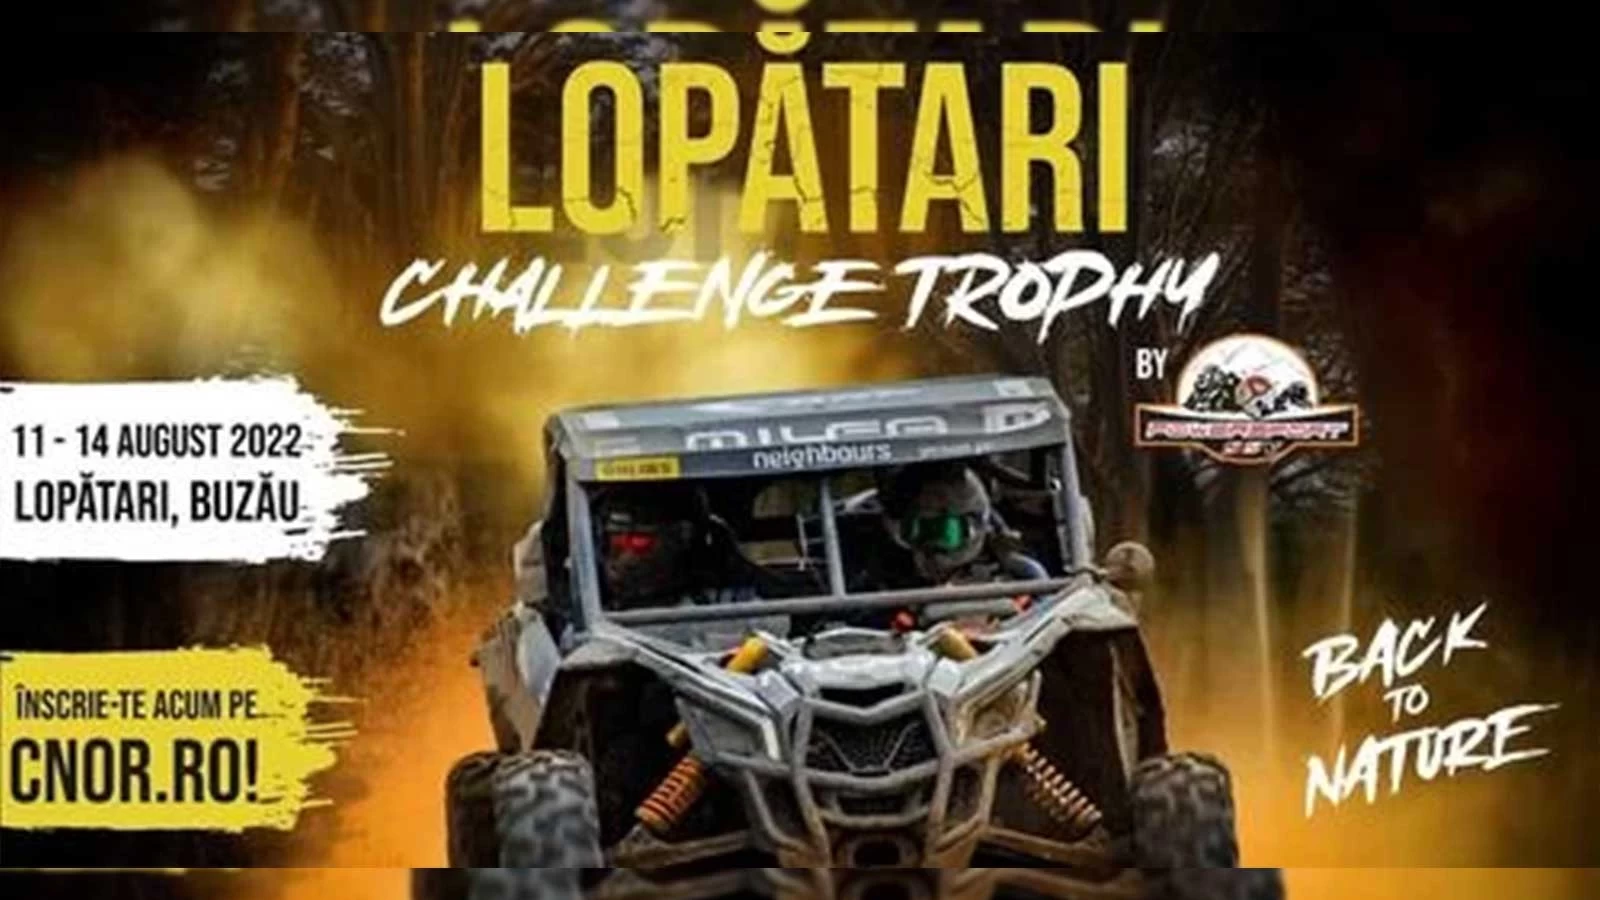 Lopatari Challenge Trophy